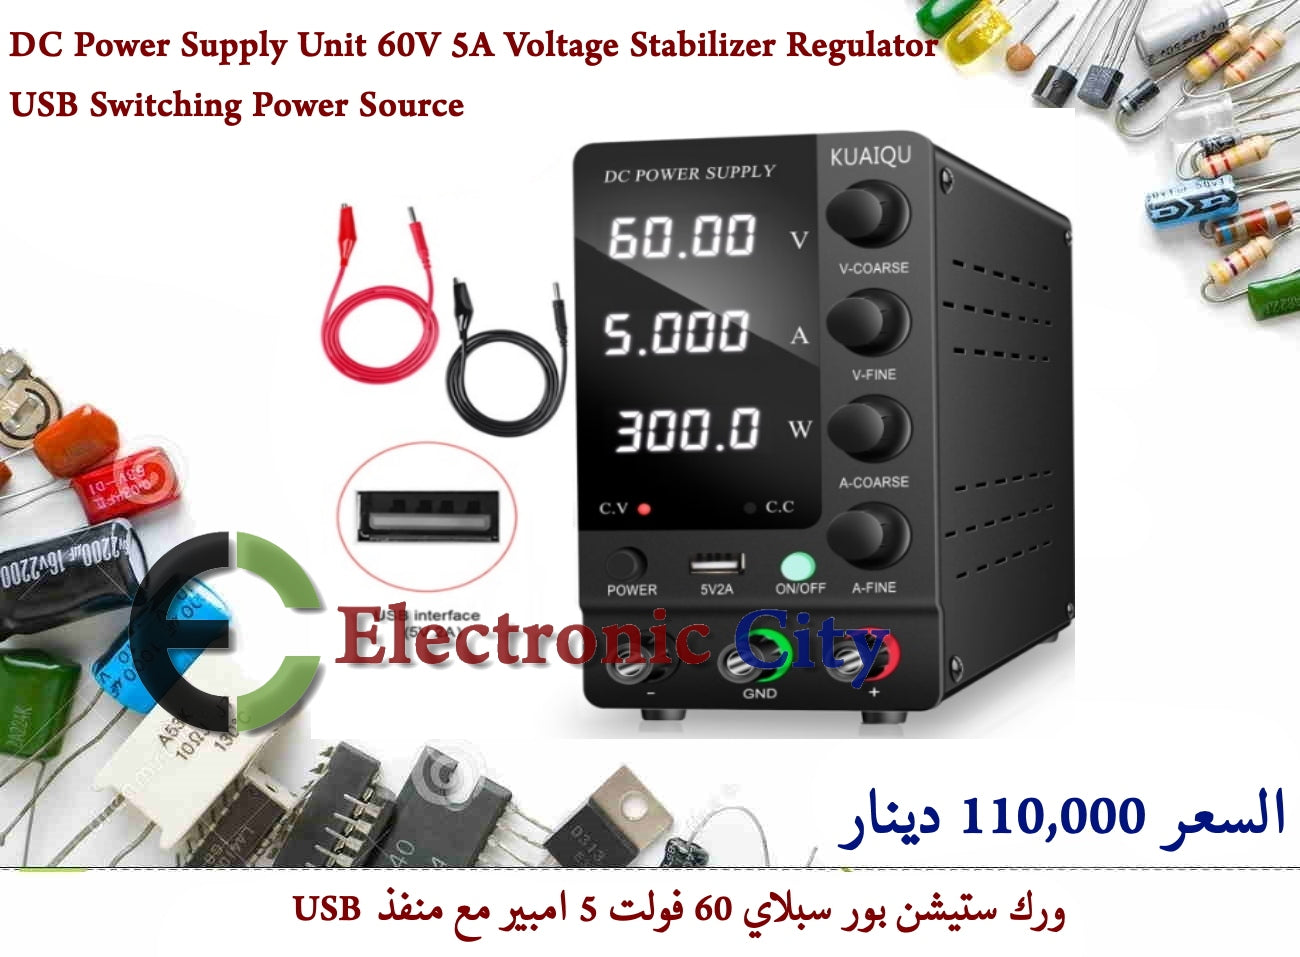 DC Power Supply Unit 60V 5A Voltage Stabilizer Regulator USB Switching Power Source